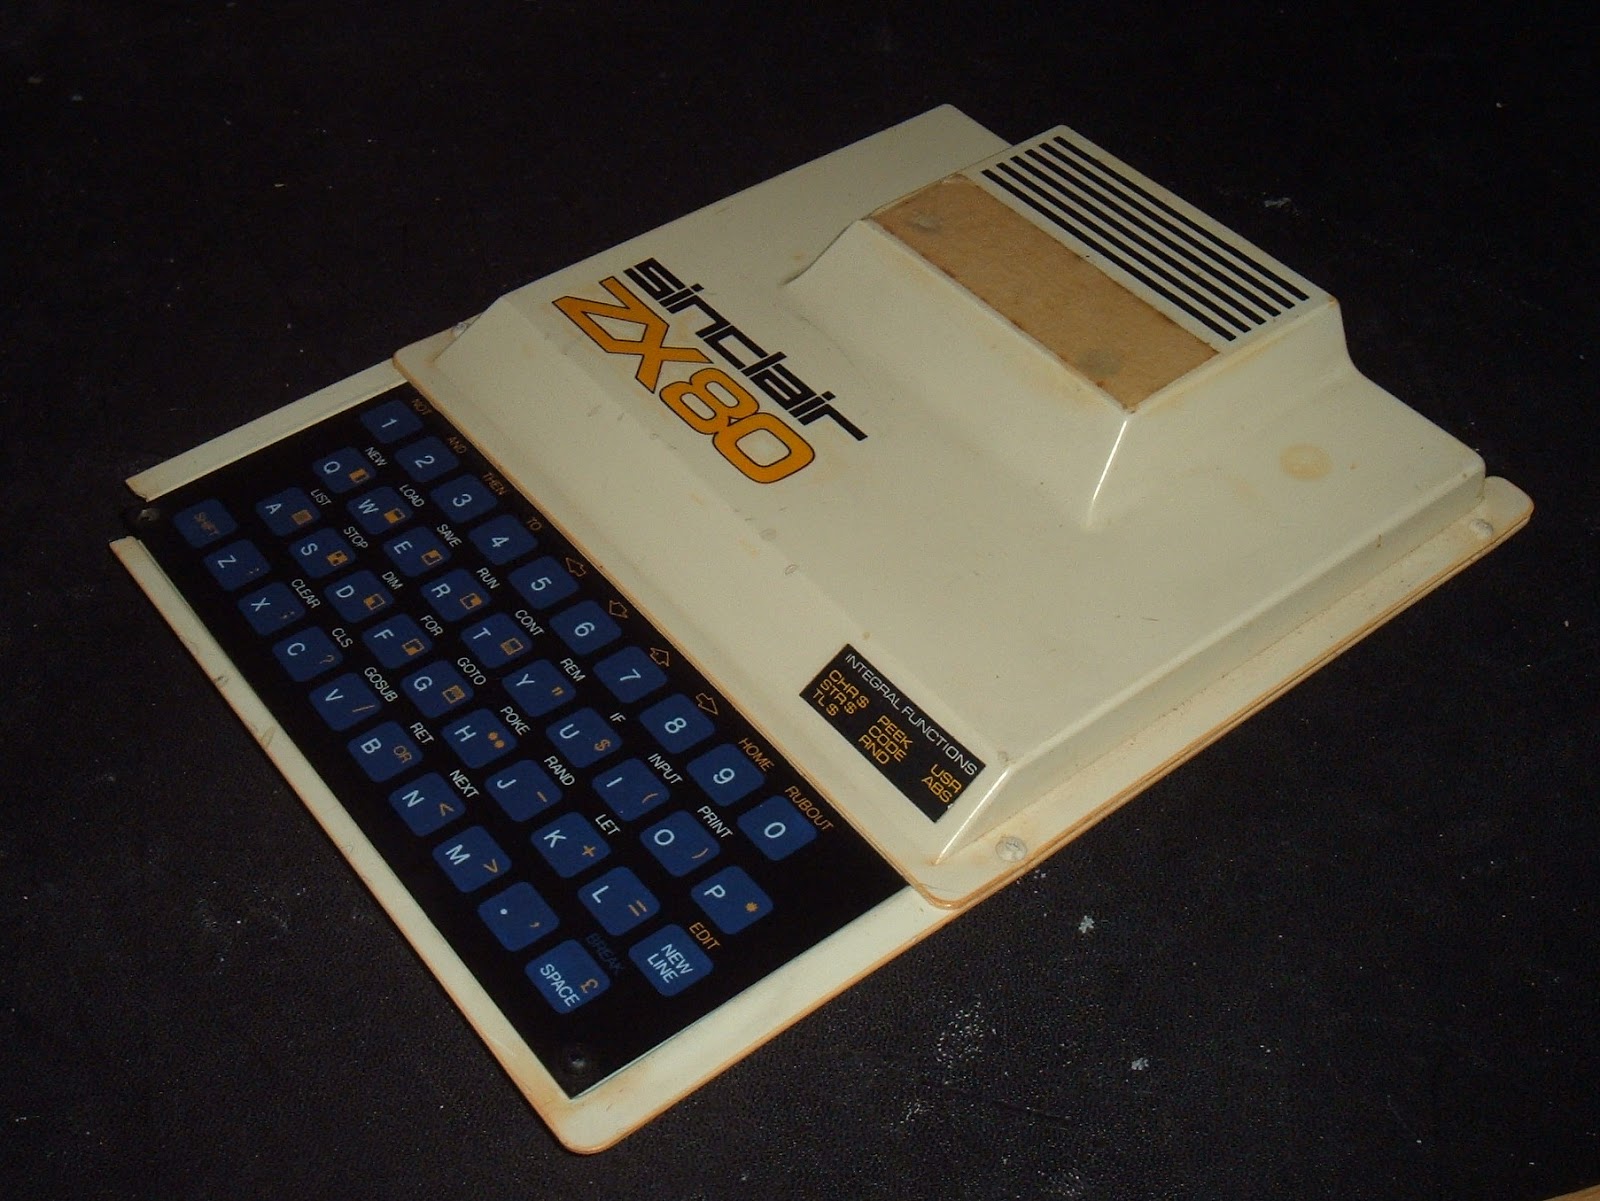 Tynemouth Software: Minstrel ZX80 Clone